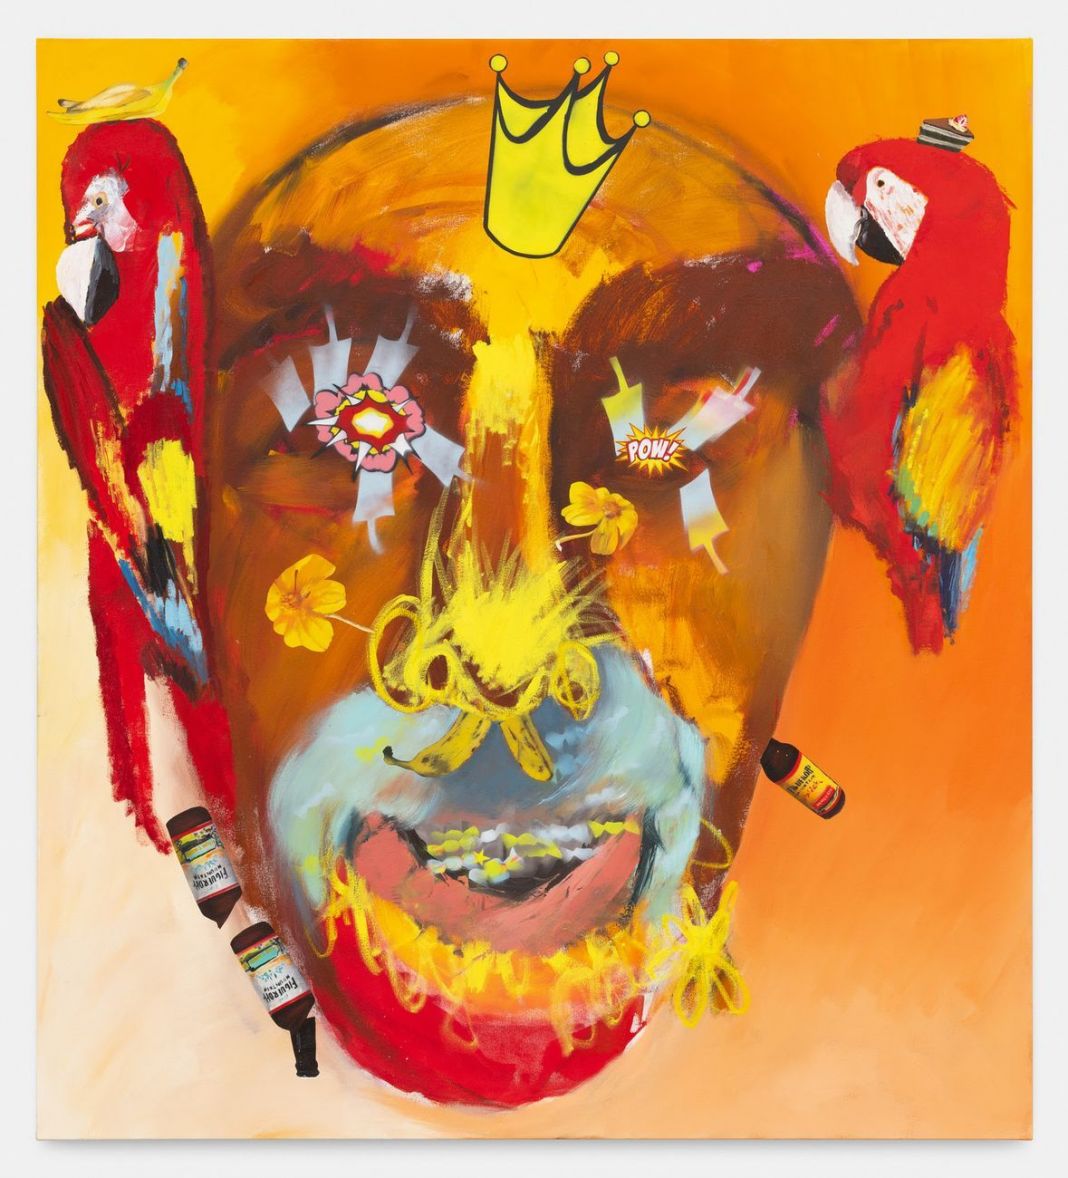 Alessandro Pessoli, Macaws King Quarantine, 2020, olio, pittura spray e pastelli a olio su tela, 145x160 cm. Courtesy Havier Hufkens Gallery